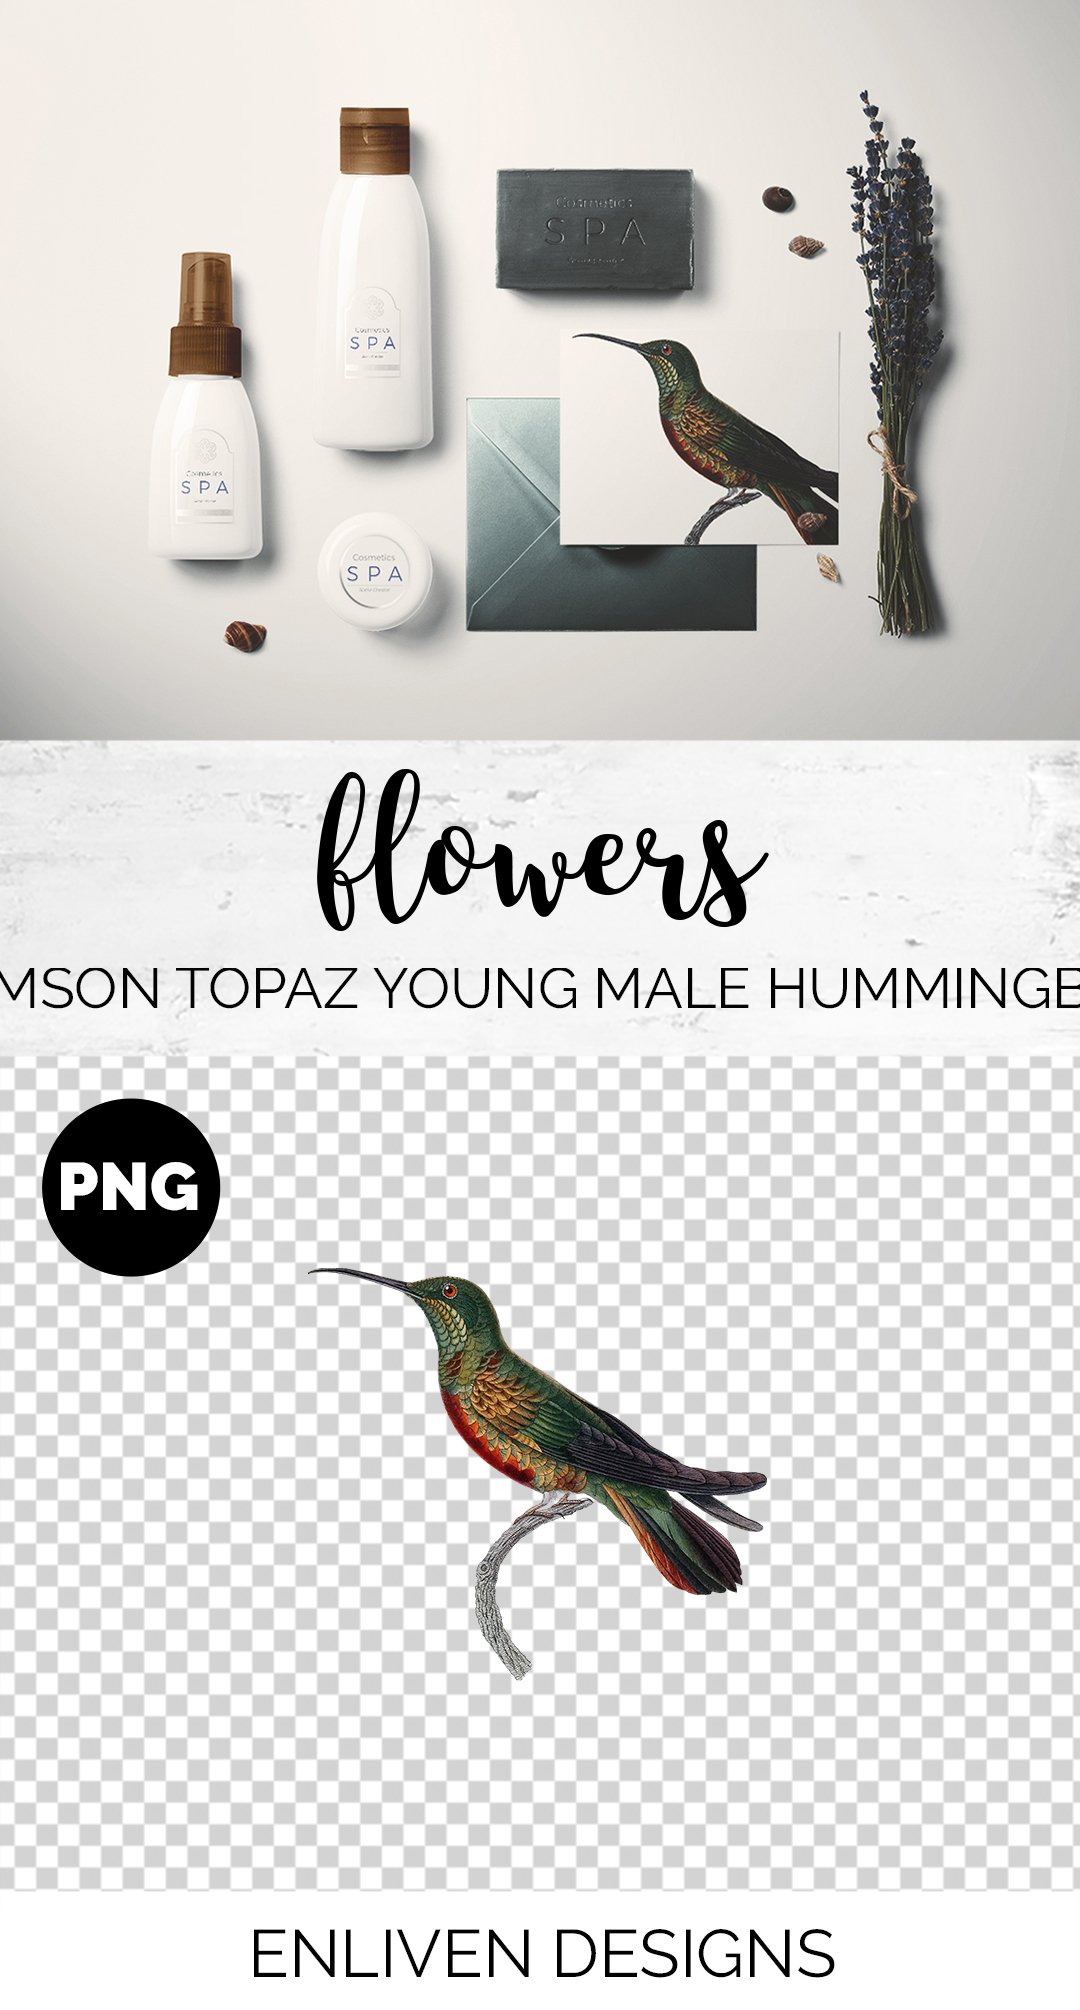 e01v01n 84561 crimson topaz young male hummingbird b 551